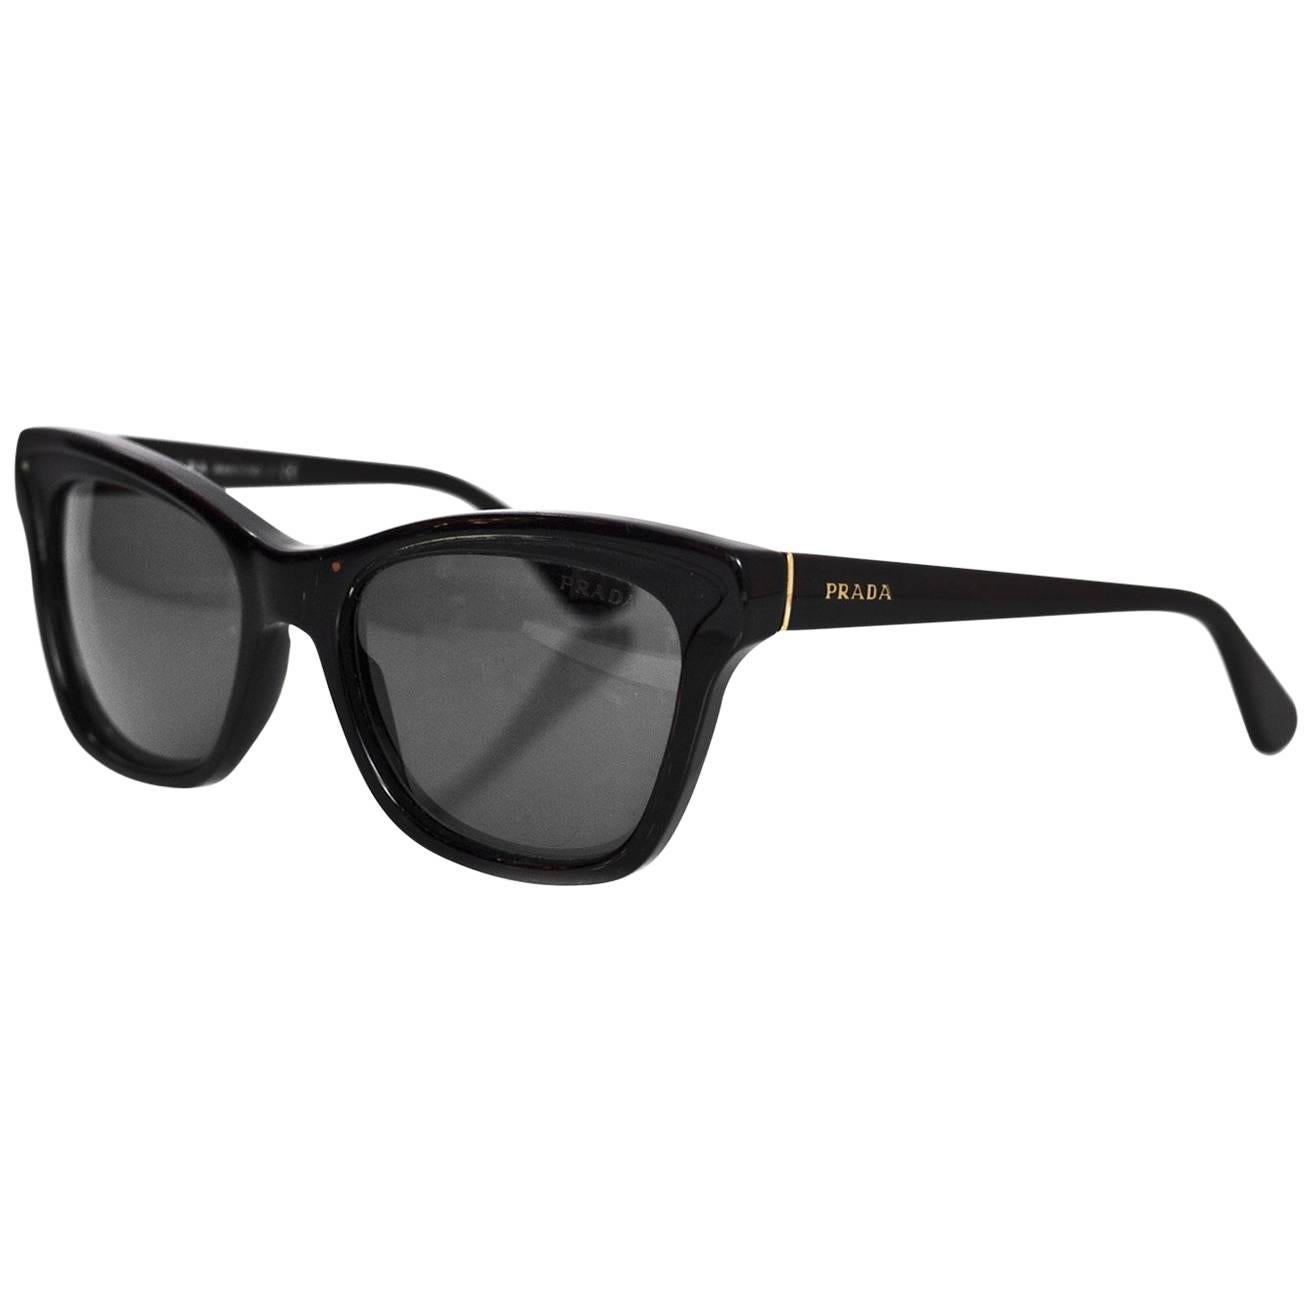 Prada Black Resin Sunglasses with Box and Case